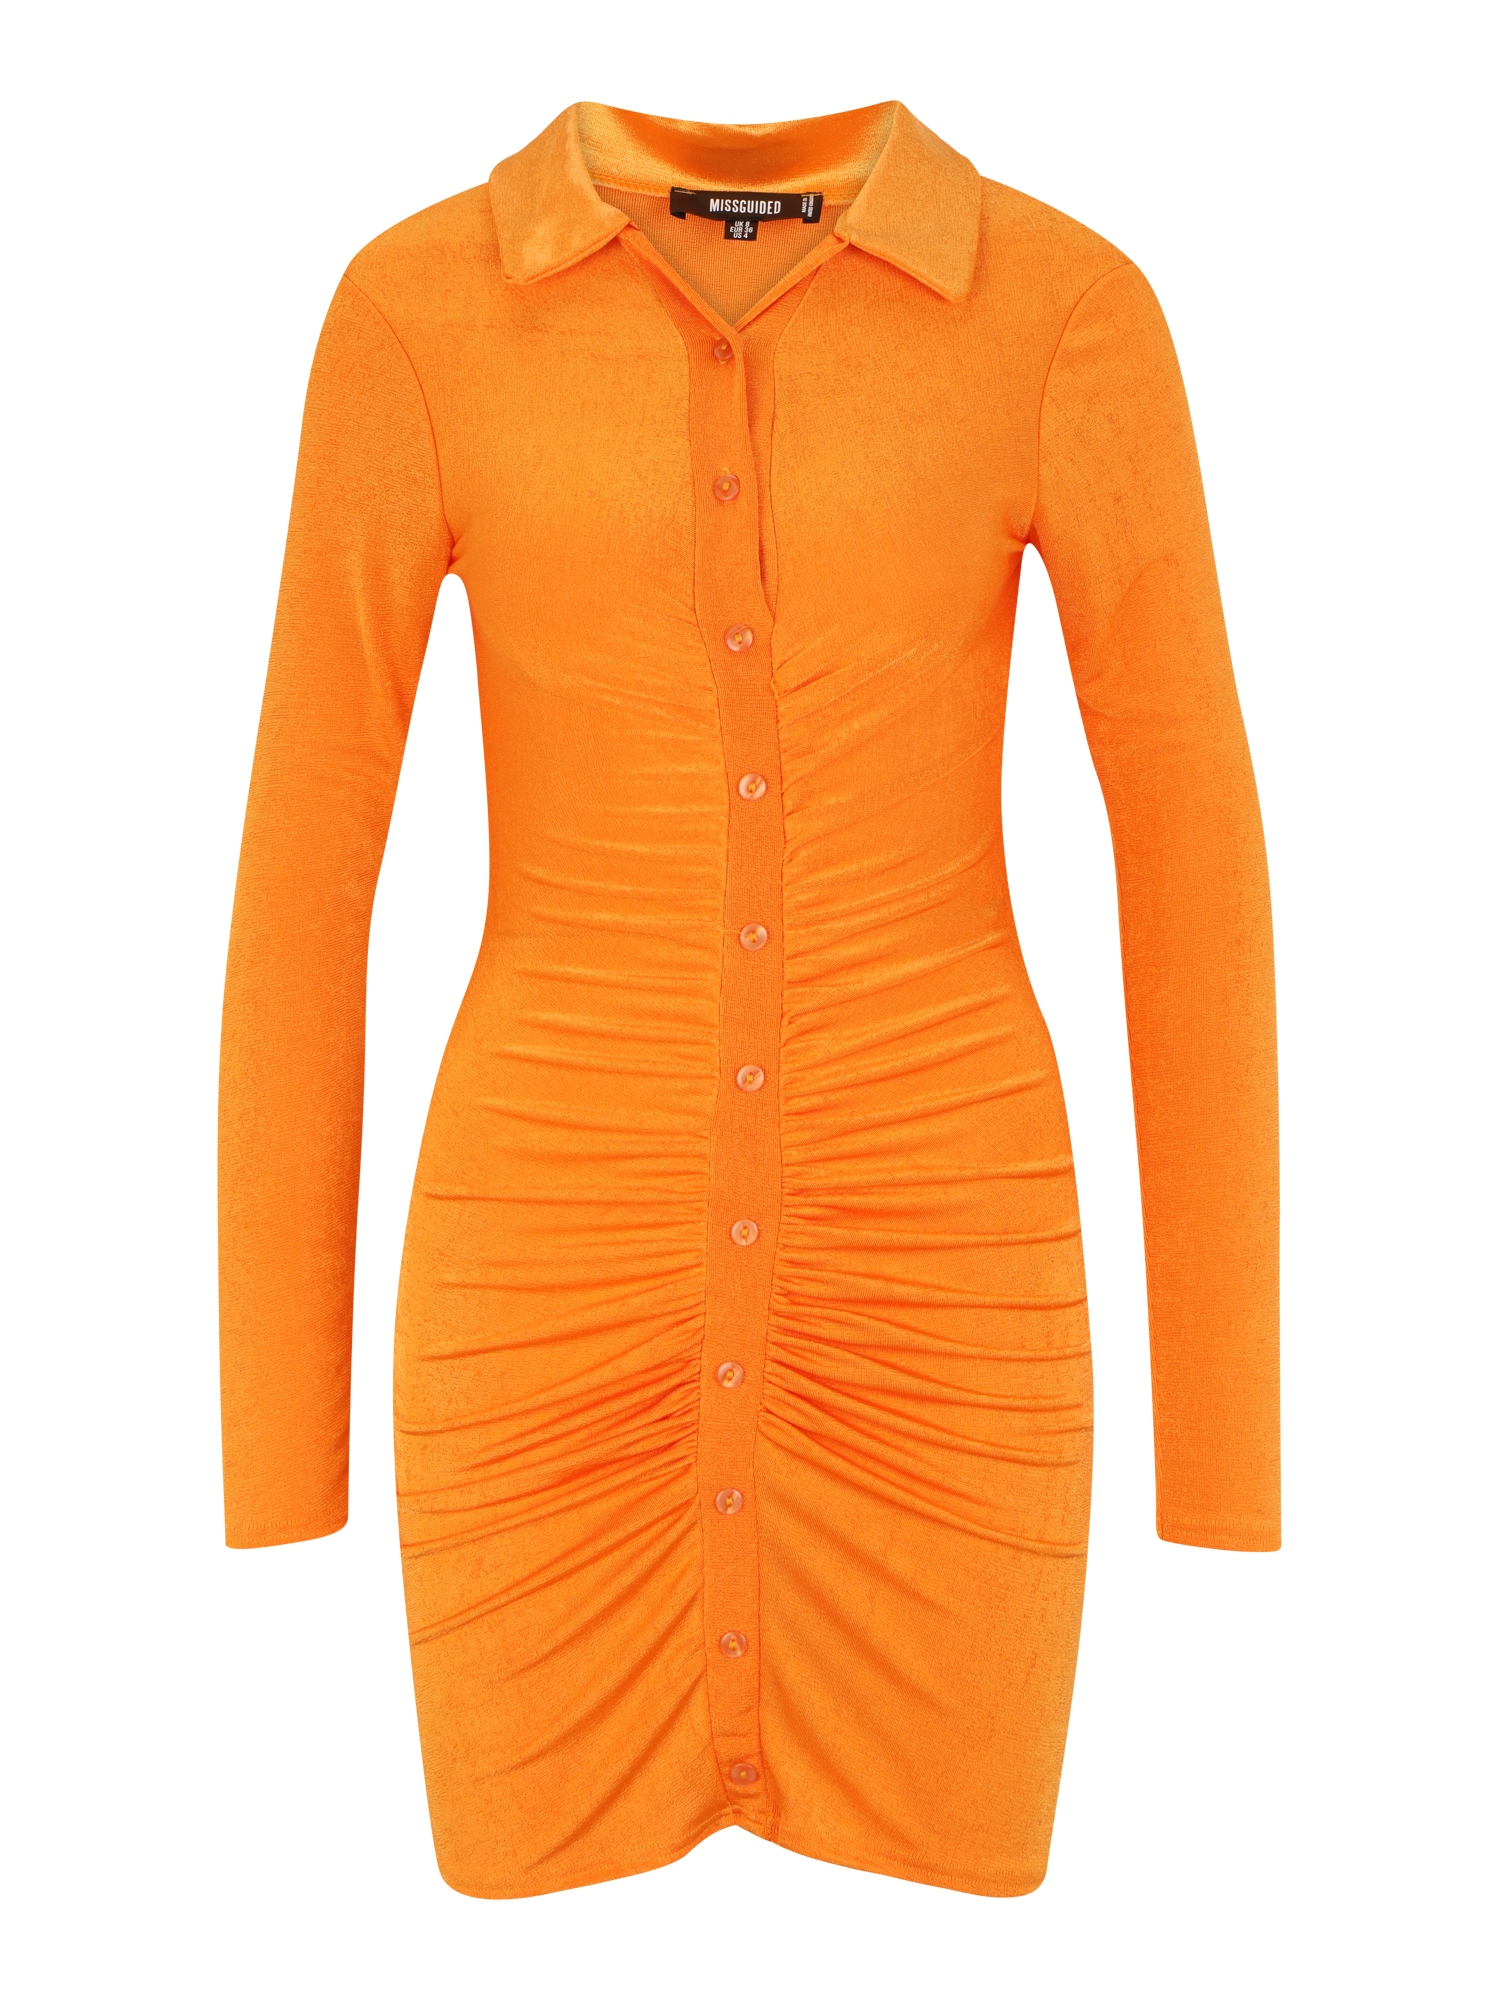 Missguided Tall Dolga srajca  oranžna